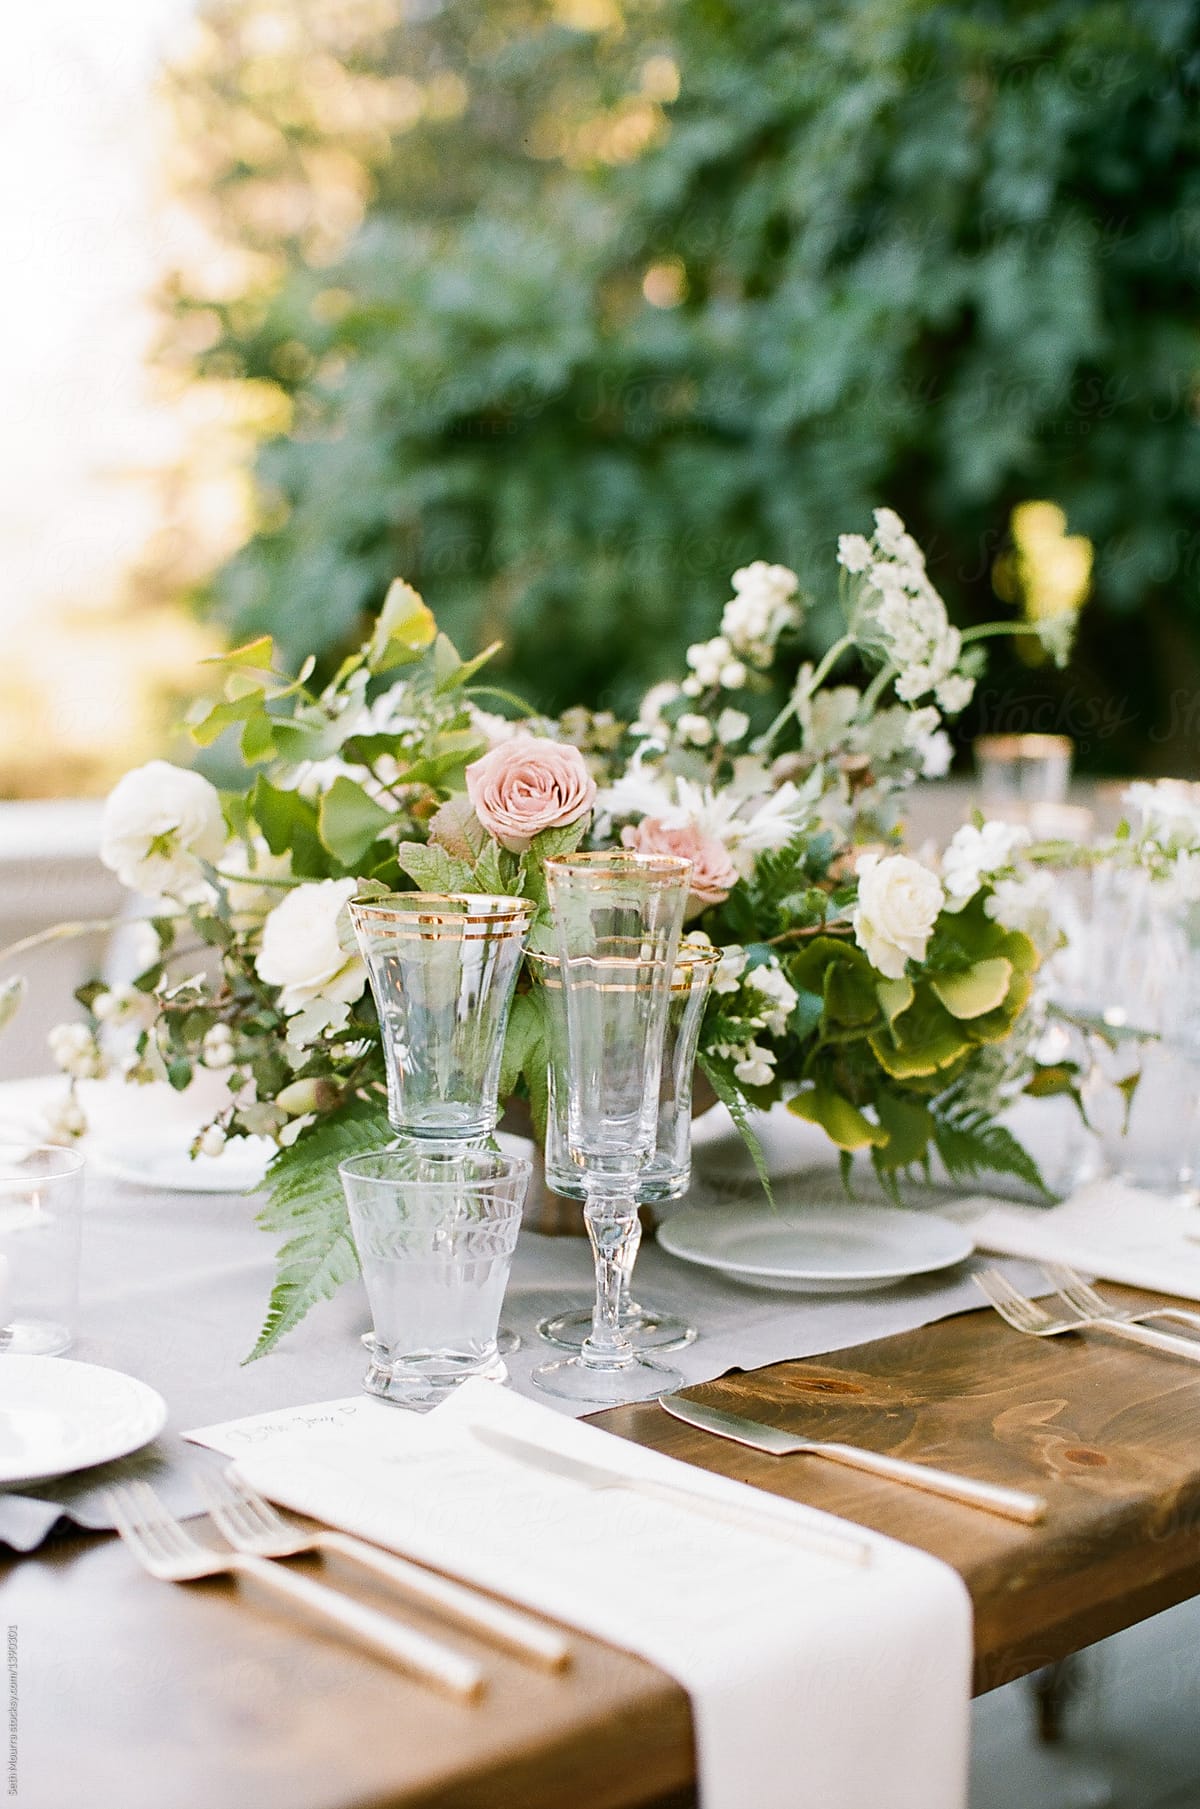 Outdoor flower arrangement on a wooden table